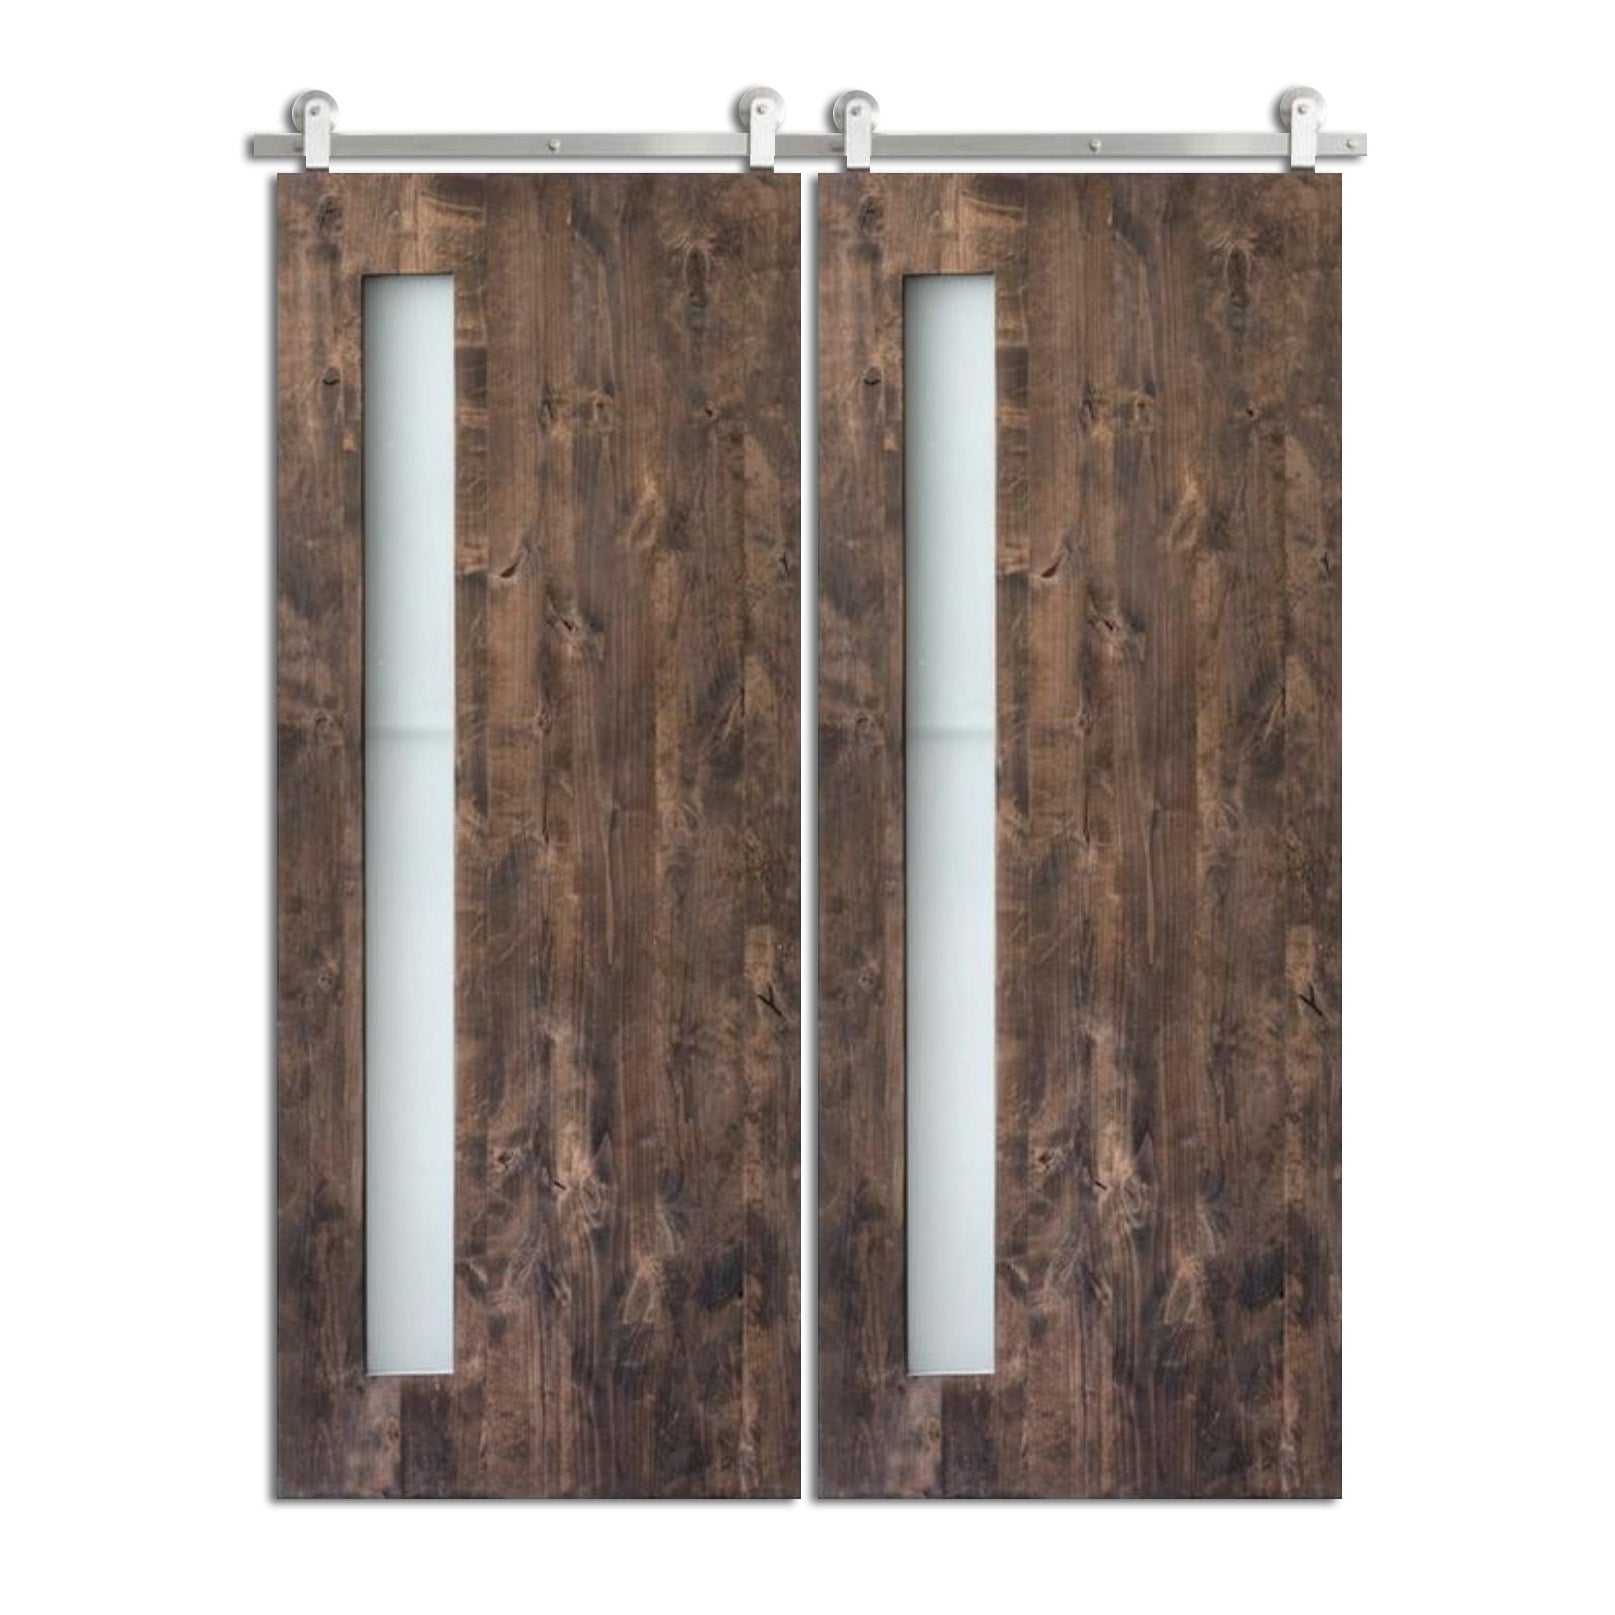 Poysbirge - Modern One Vertical Glass Panel Double Barn Door